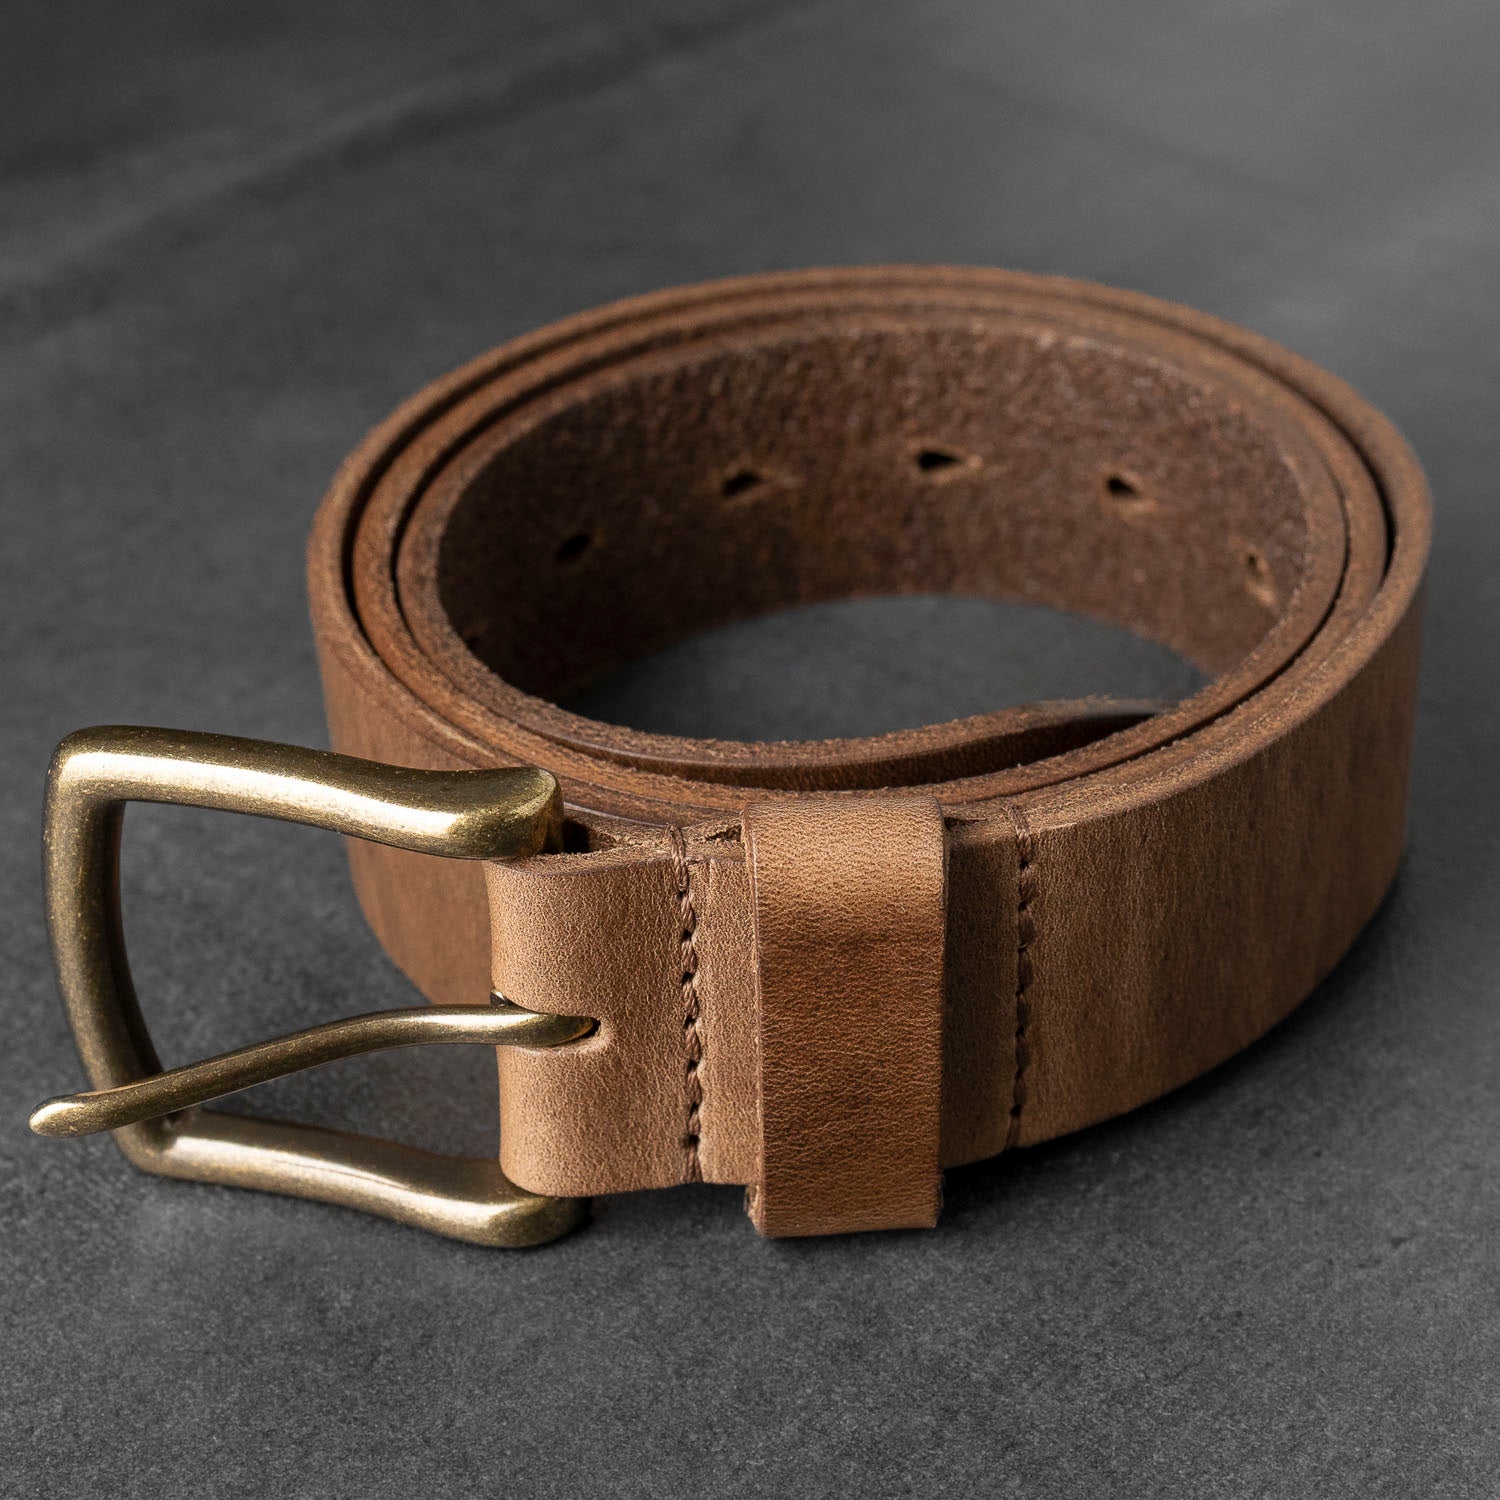 The Belt - Brown Suede, Brass Buckle